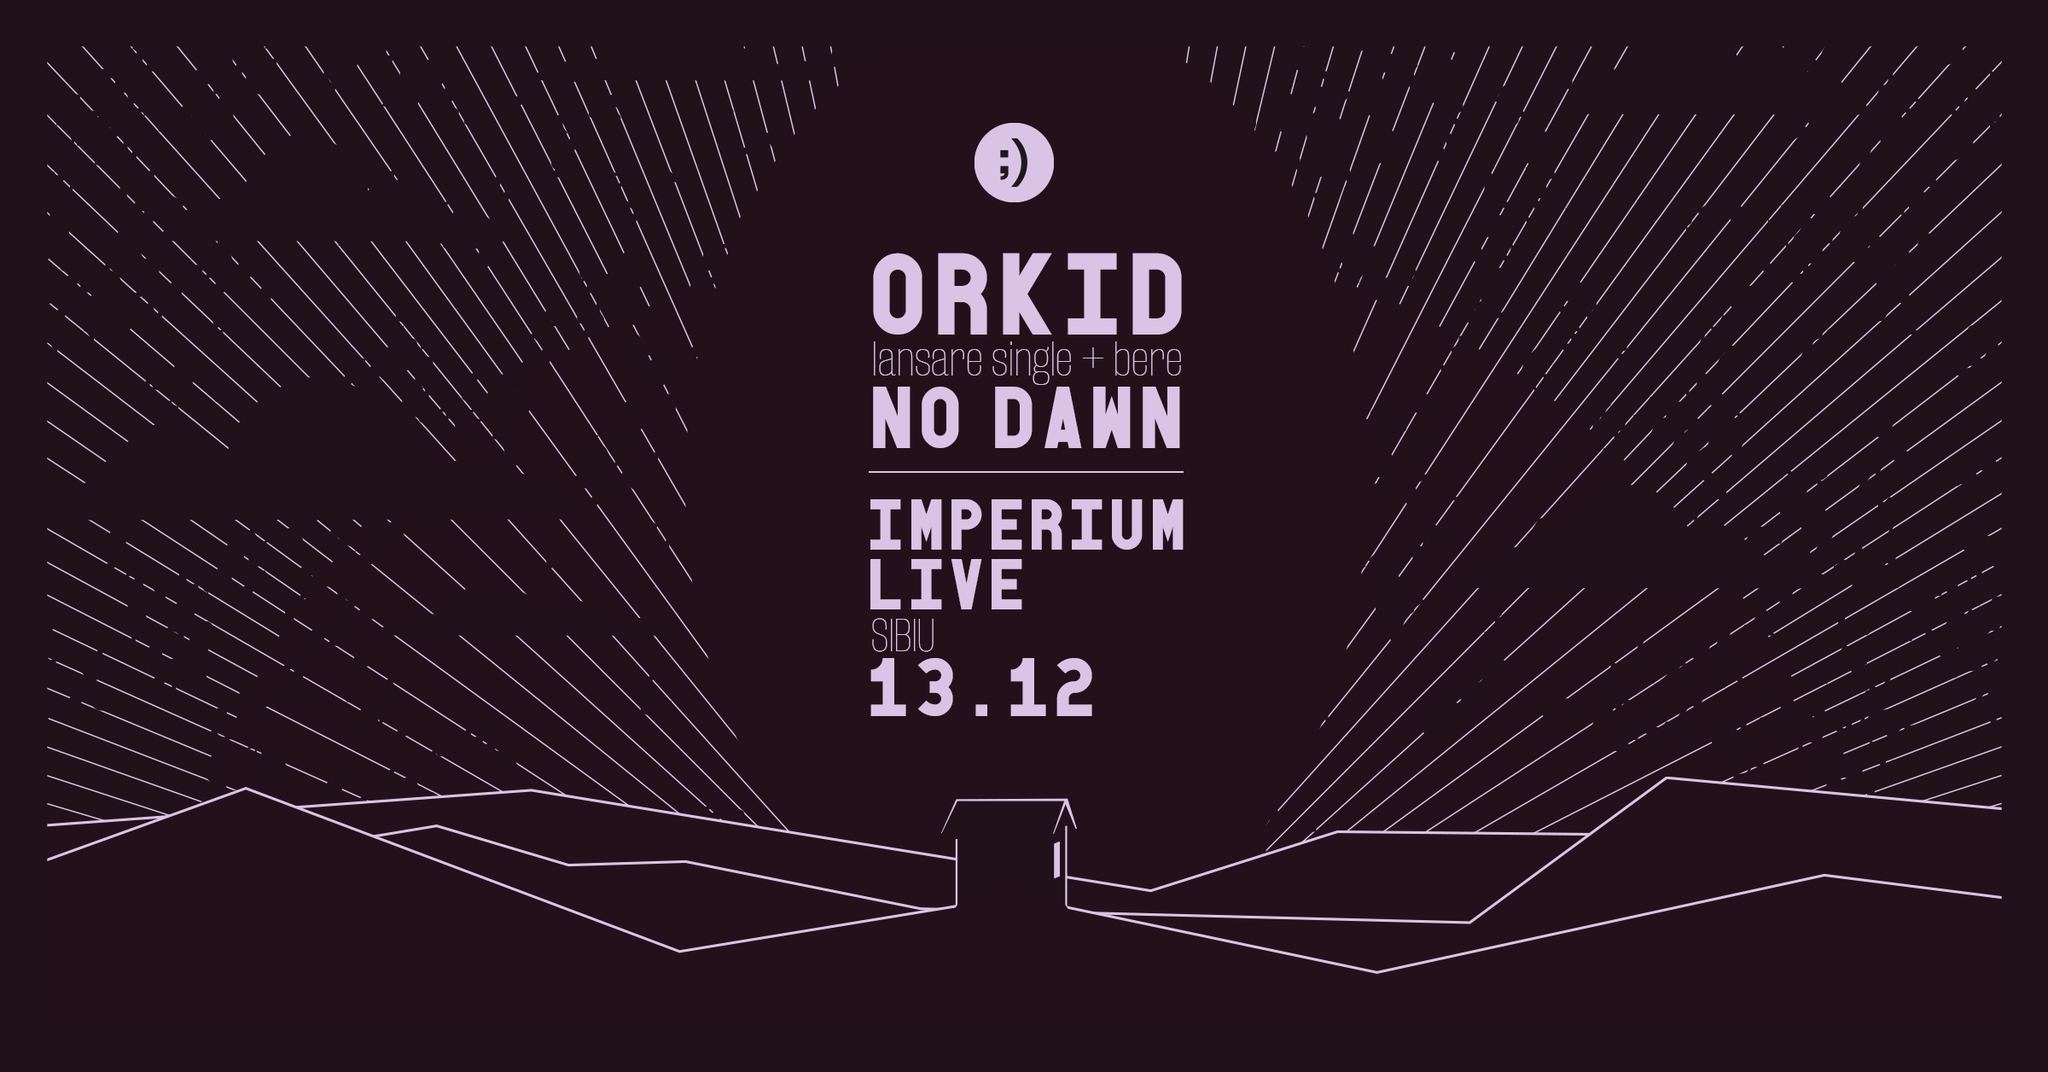 Orkid - No Dawn/ Lansare single și bere @Imperium Live